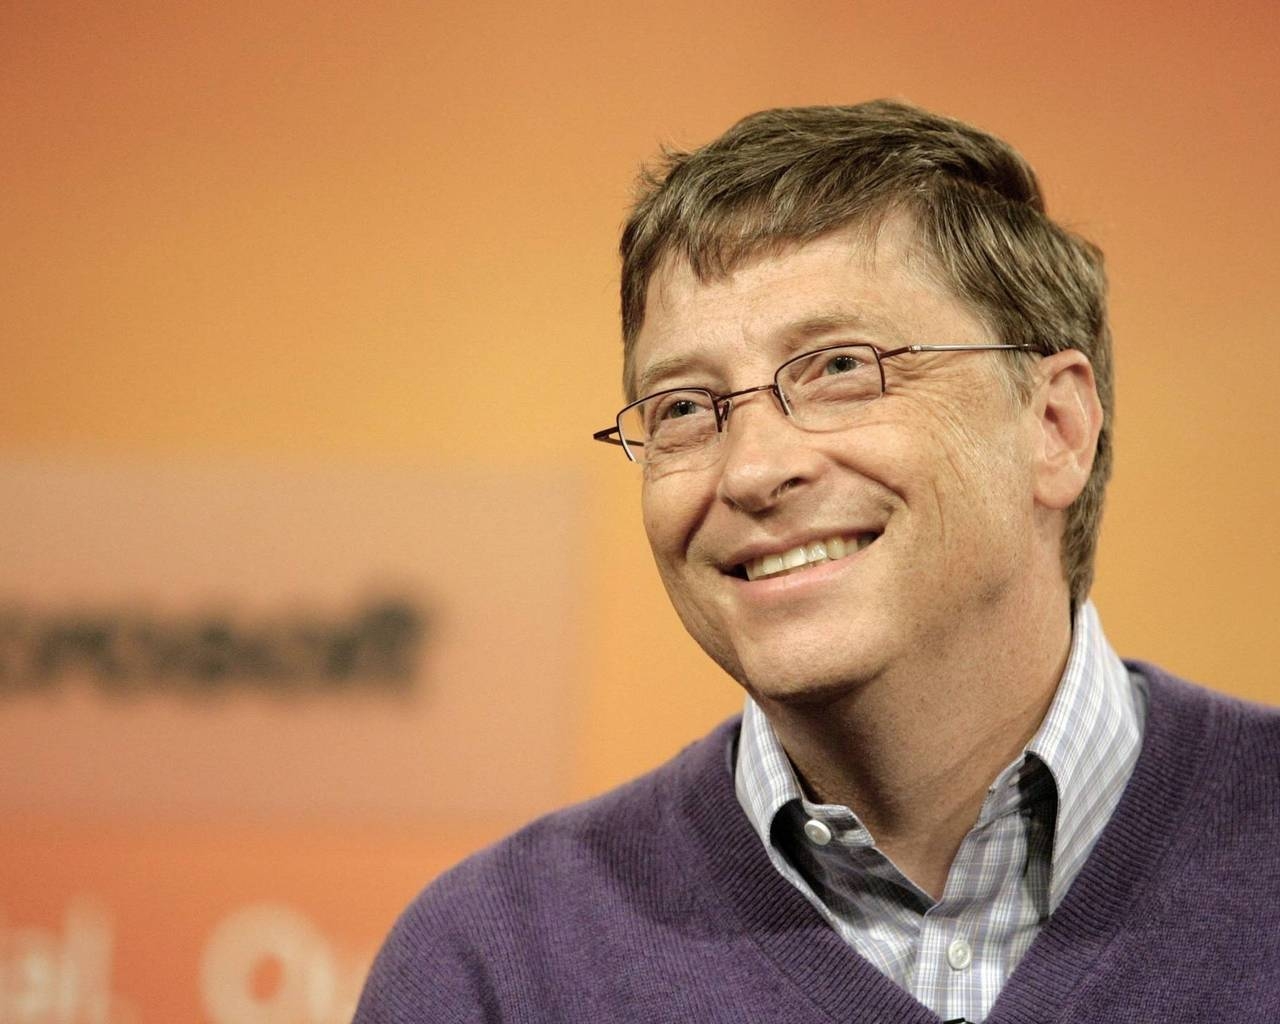 Bill Gates for 1280 x 1024 resolution